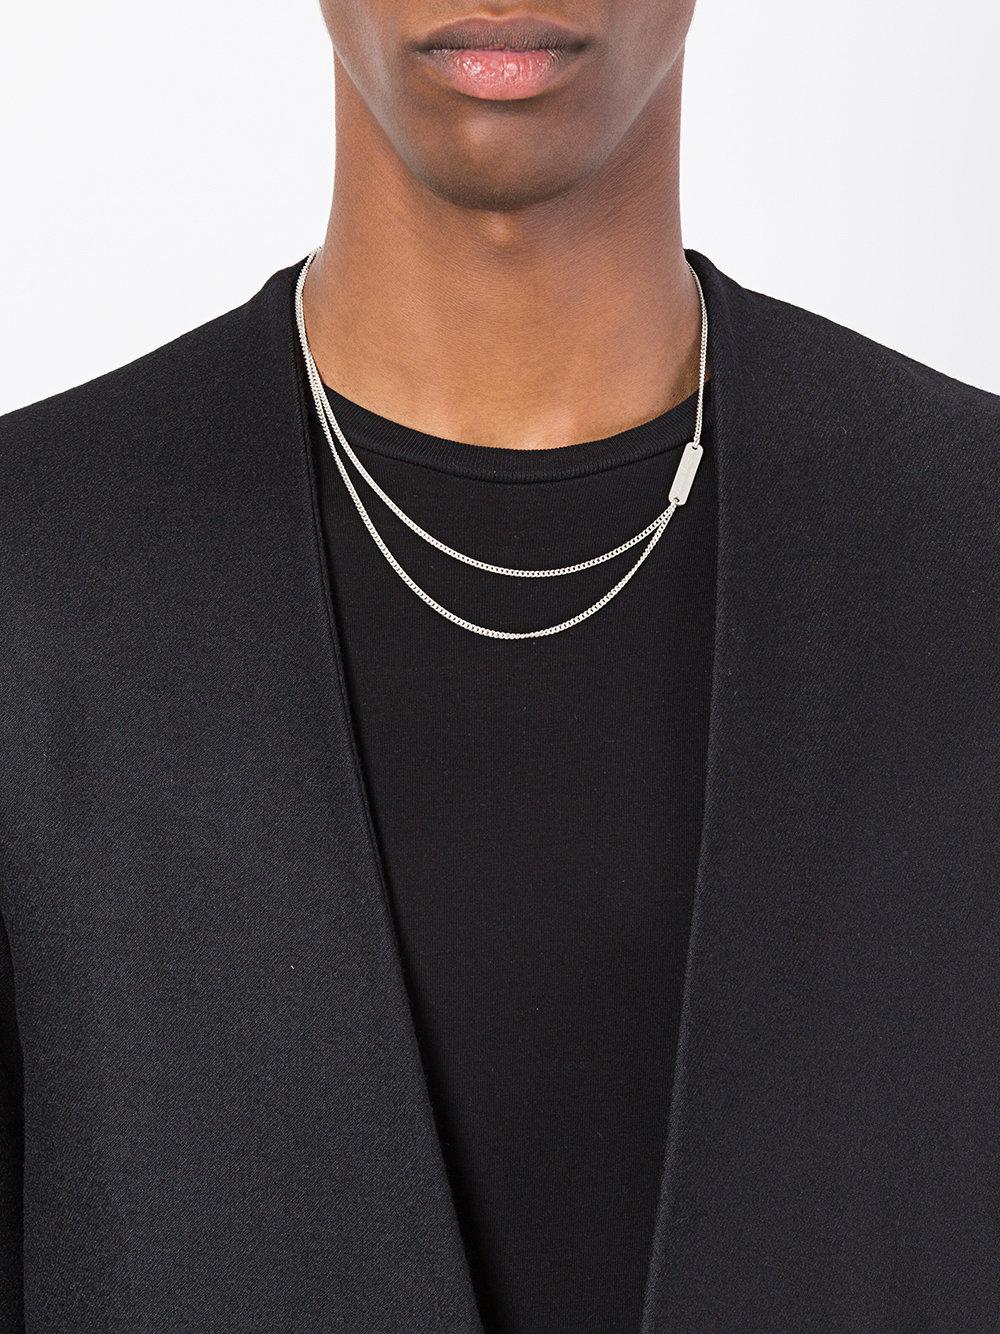 Maison Margiela Multi-layer Necklace in Metallic for Men | Lyst